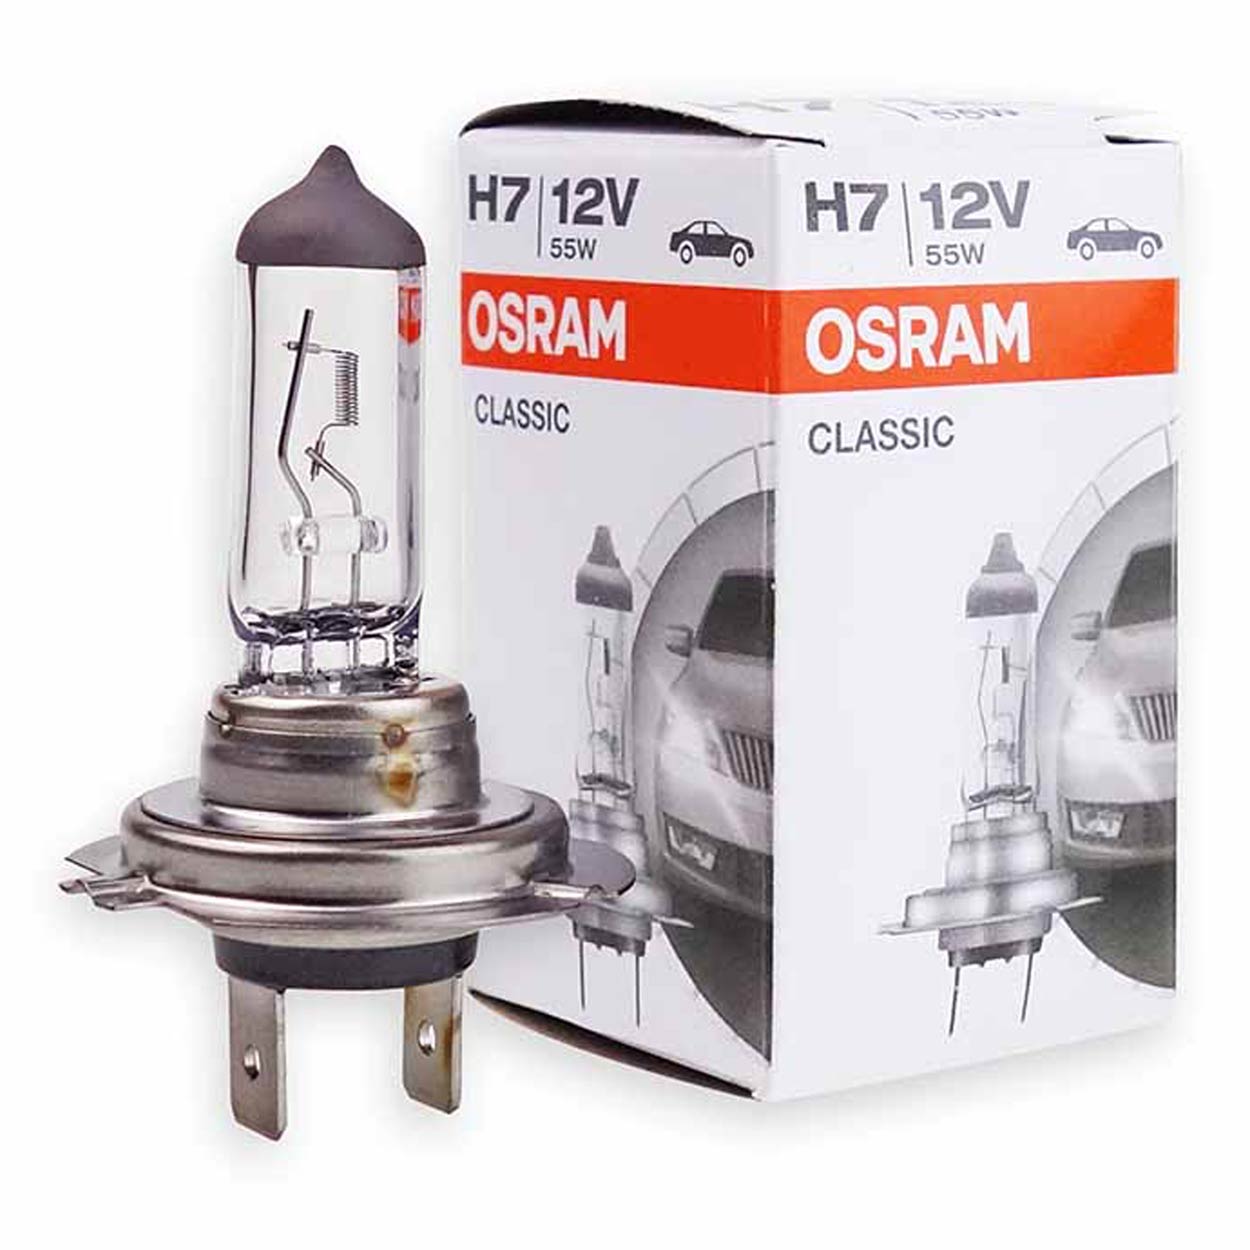 Buy Osram Car Headlight Bulb / 12v 55w H7 / Most Popular Wholesale & Retail